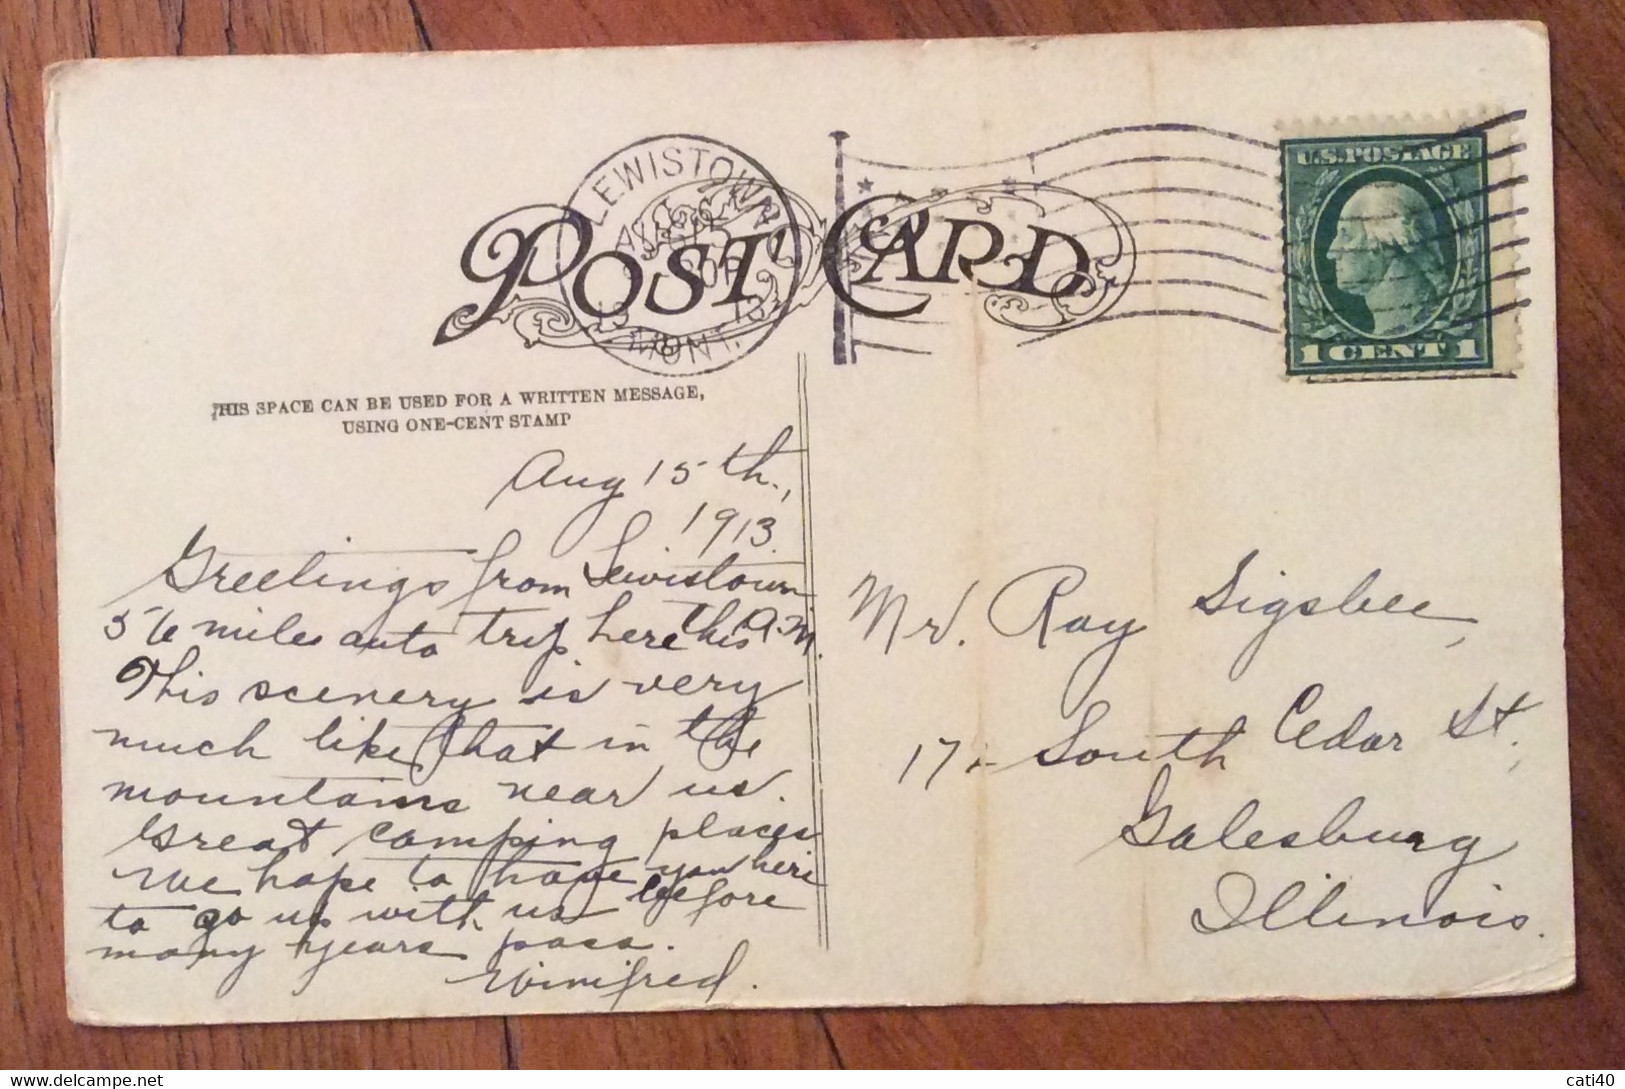 U.S.A. - JUDITH BASIN SCENERY,ROCK CREEK CANYON - VINTAGE POST CARD LEWISTOWN ,MONT. AUG 15  1913 - Cape Cod